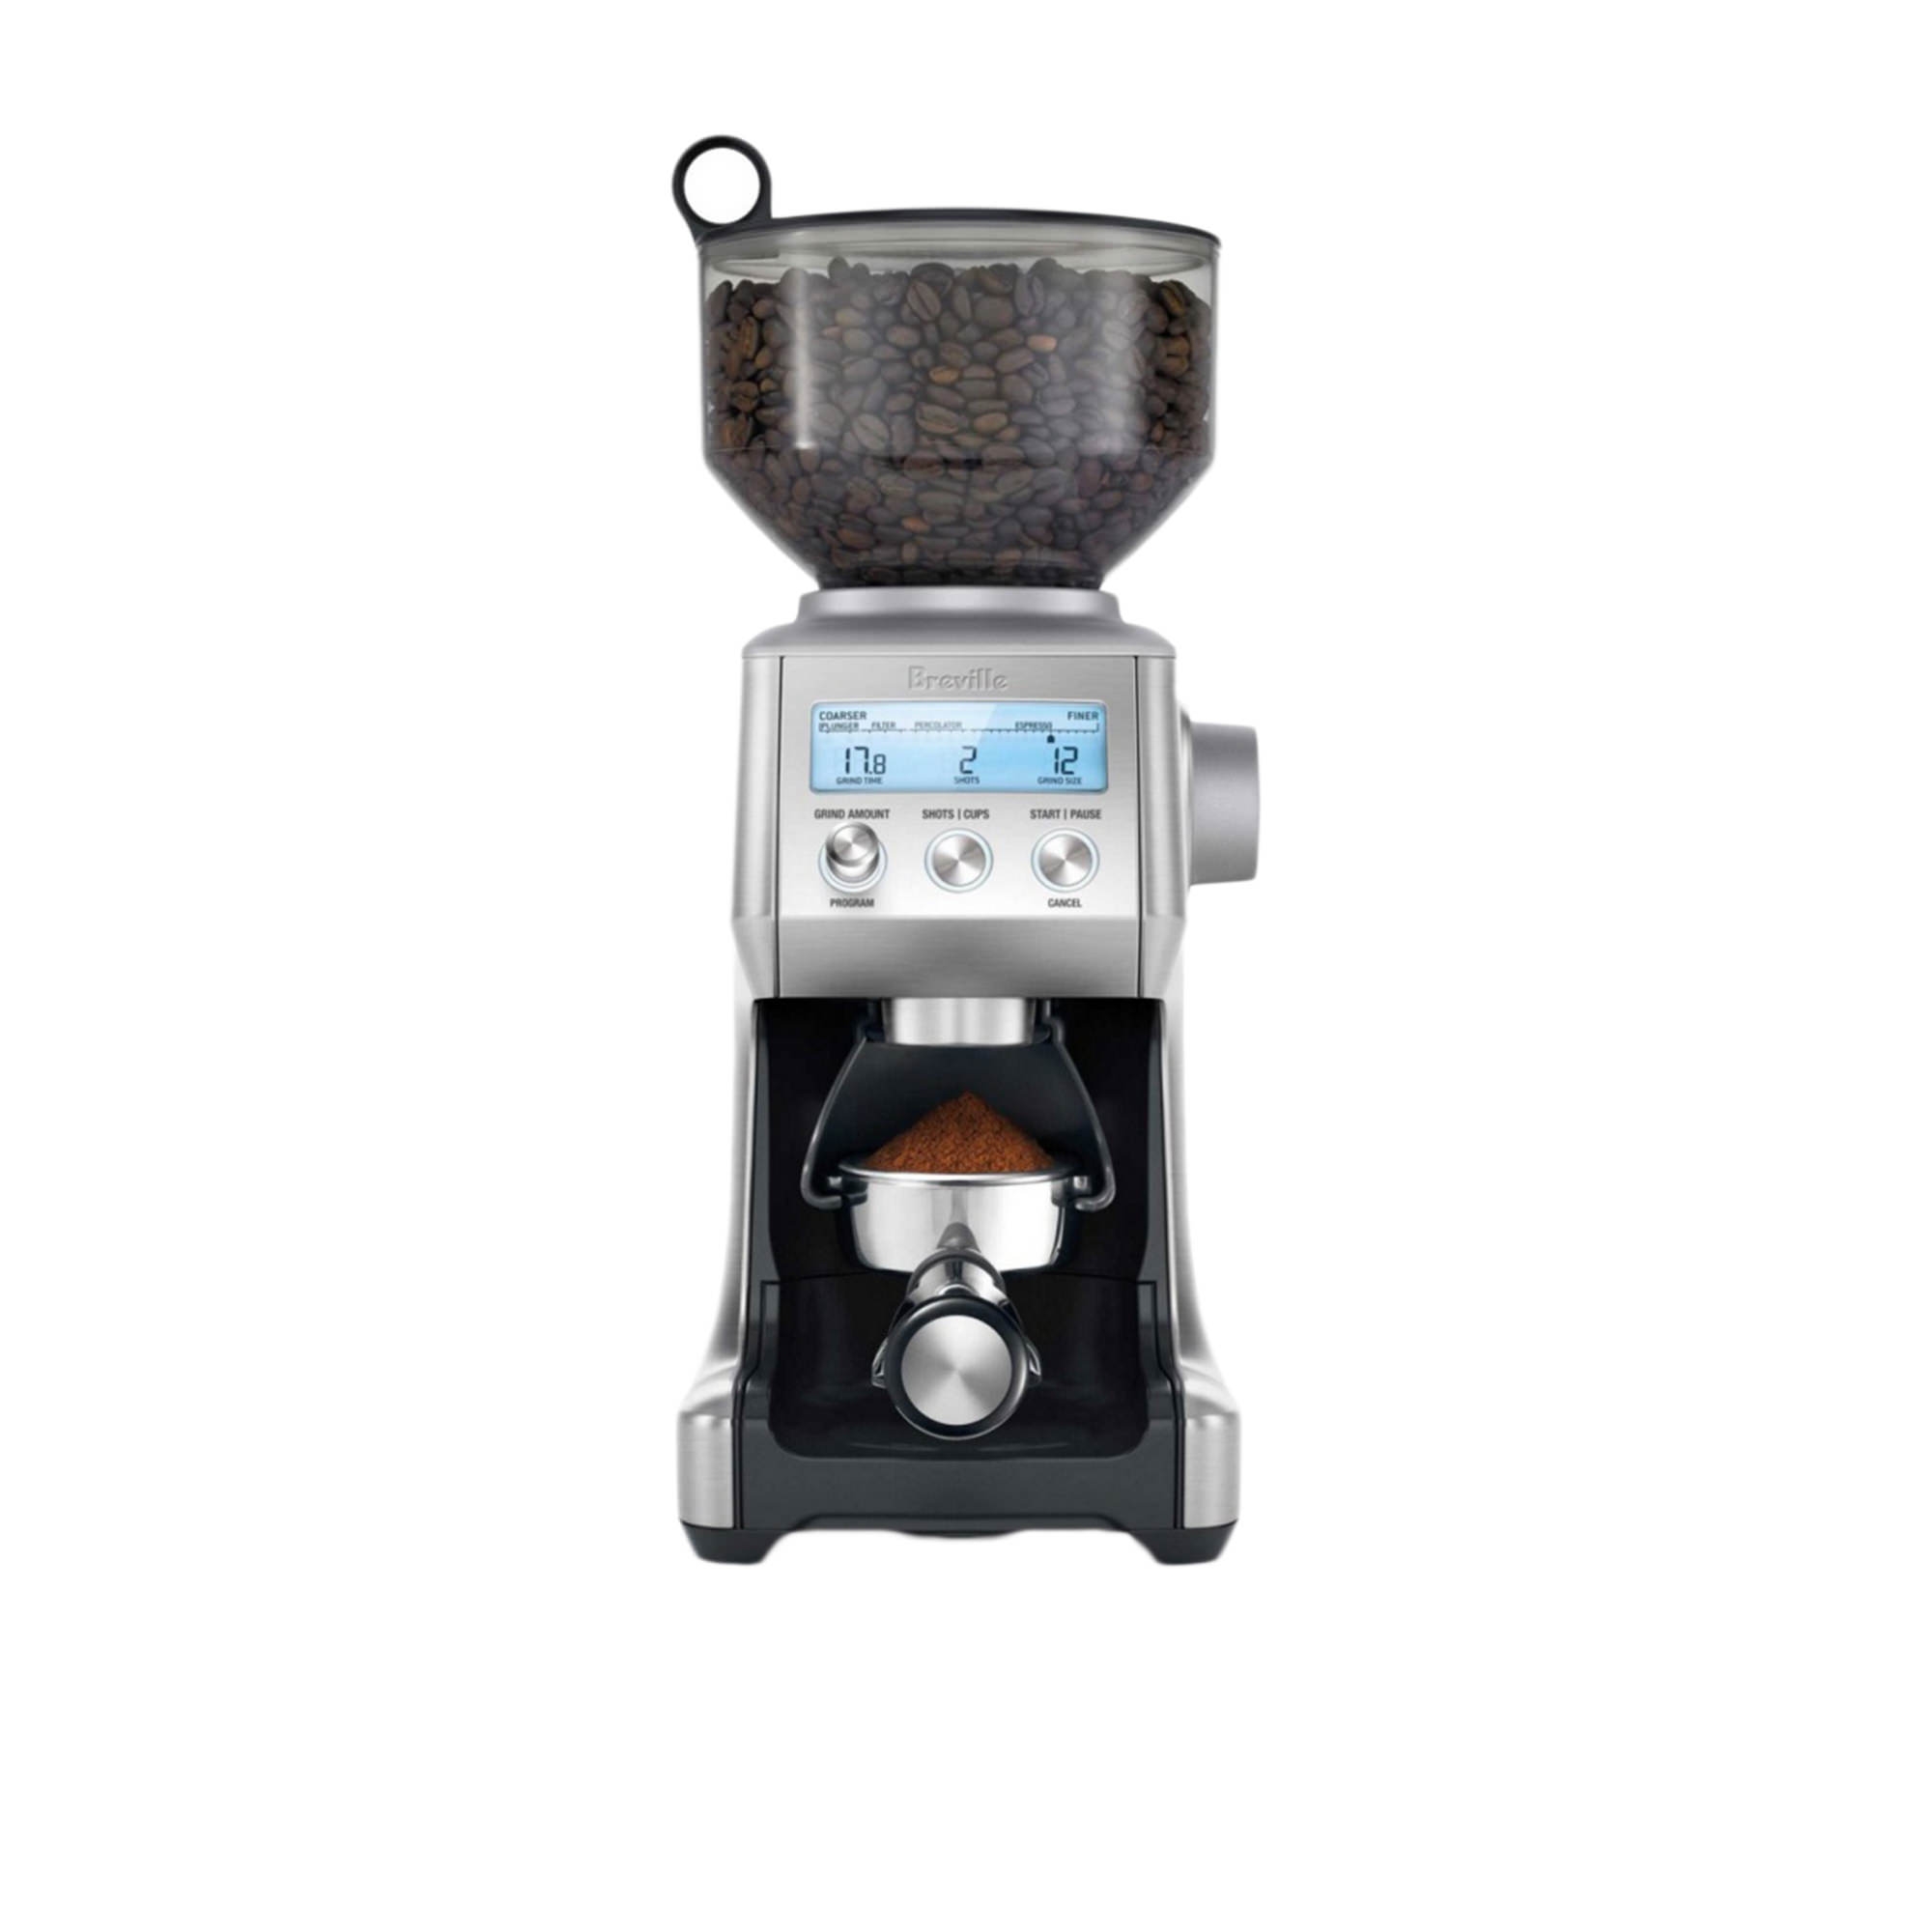 Breville The Smart Grinder Pro Coffee Grinder Brushed Stainless Steel Image 1